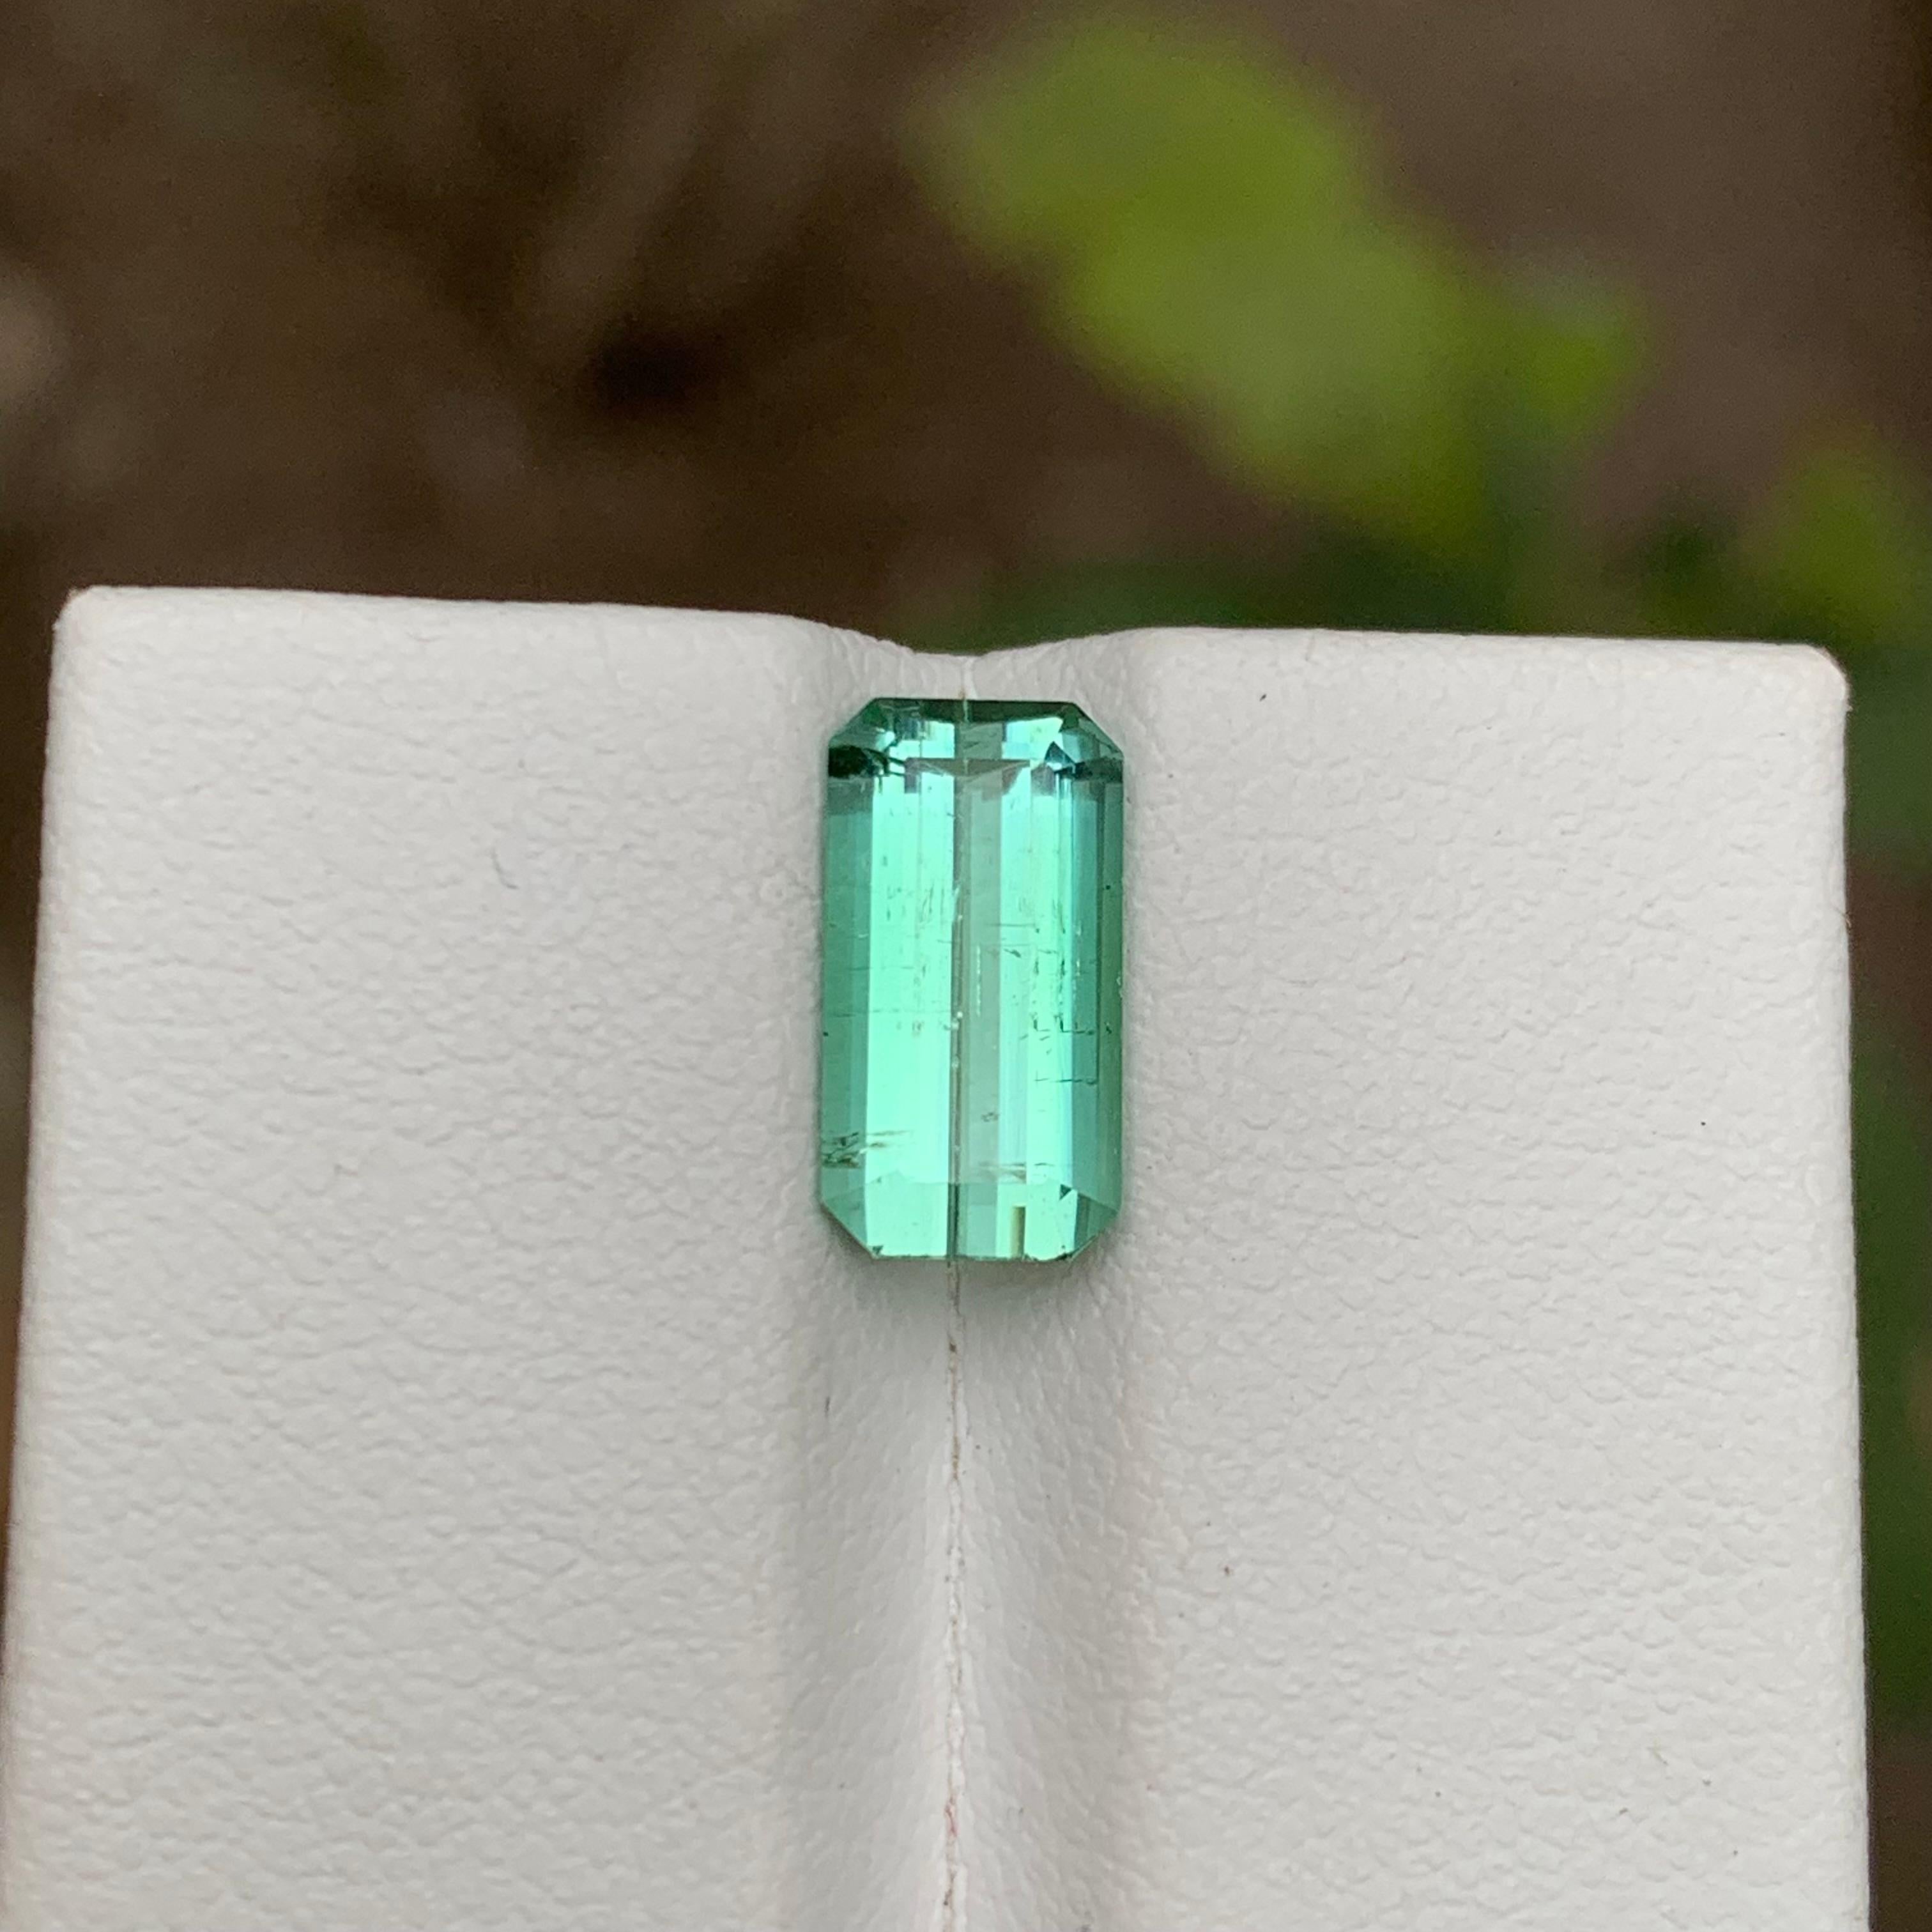 Rare Light Bluish Green Tourmaline Gemstone 2.70 Ct Emerald Cut for Ring Jewelry For Sale 1